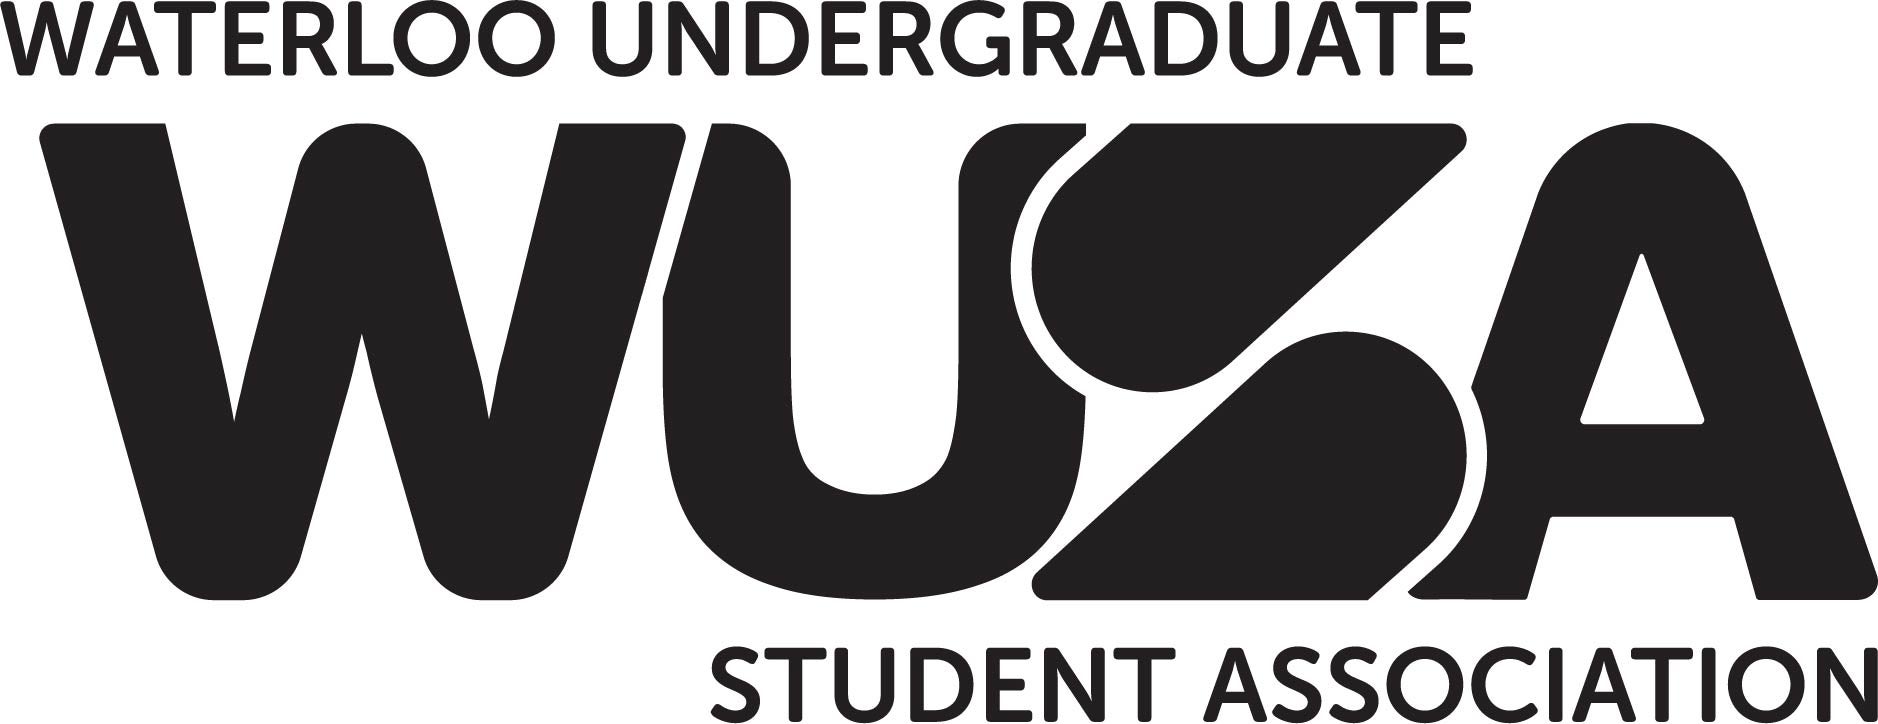 Waterloo Undergraduate Student Associate